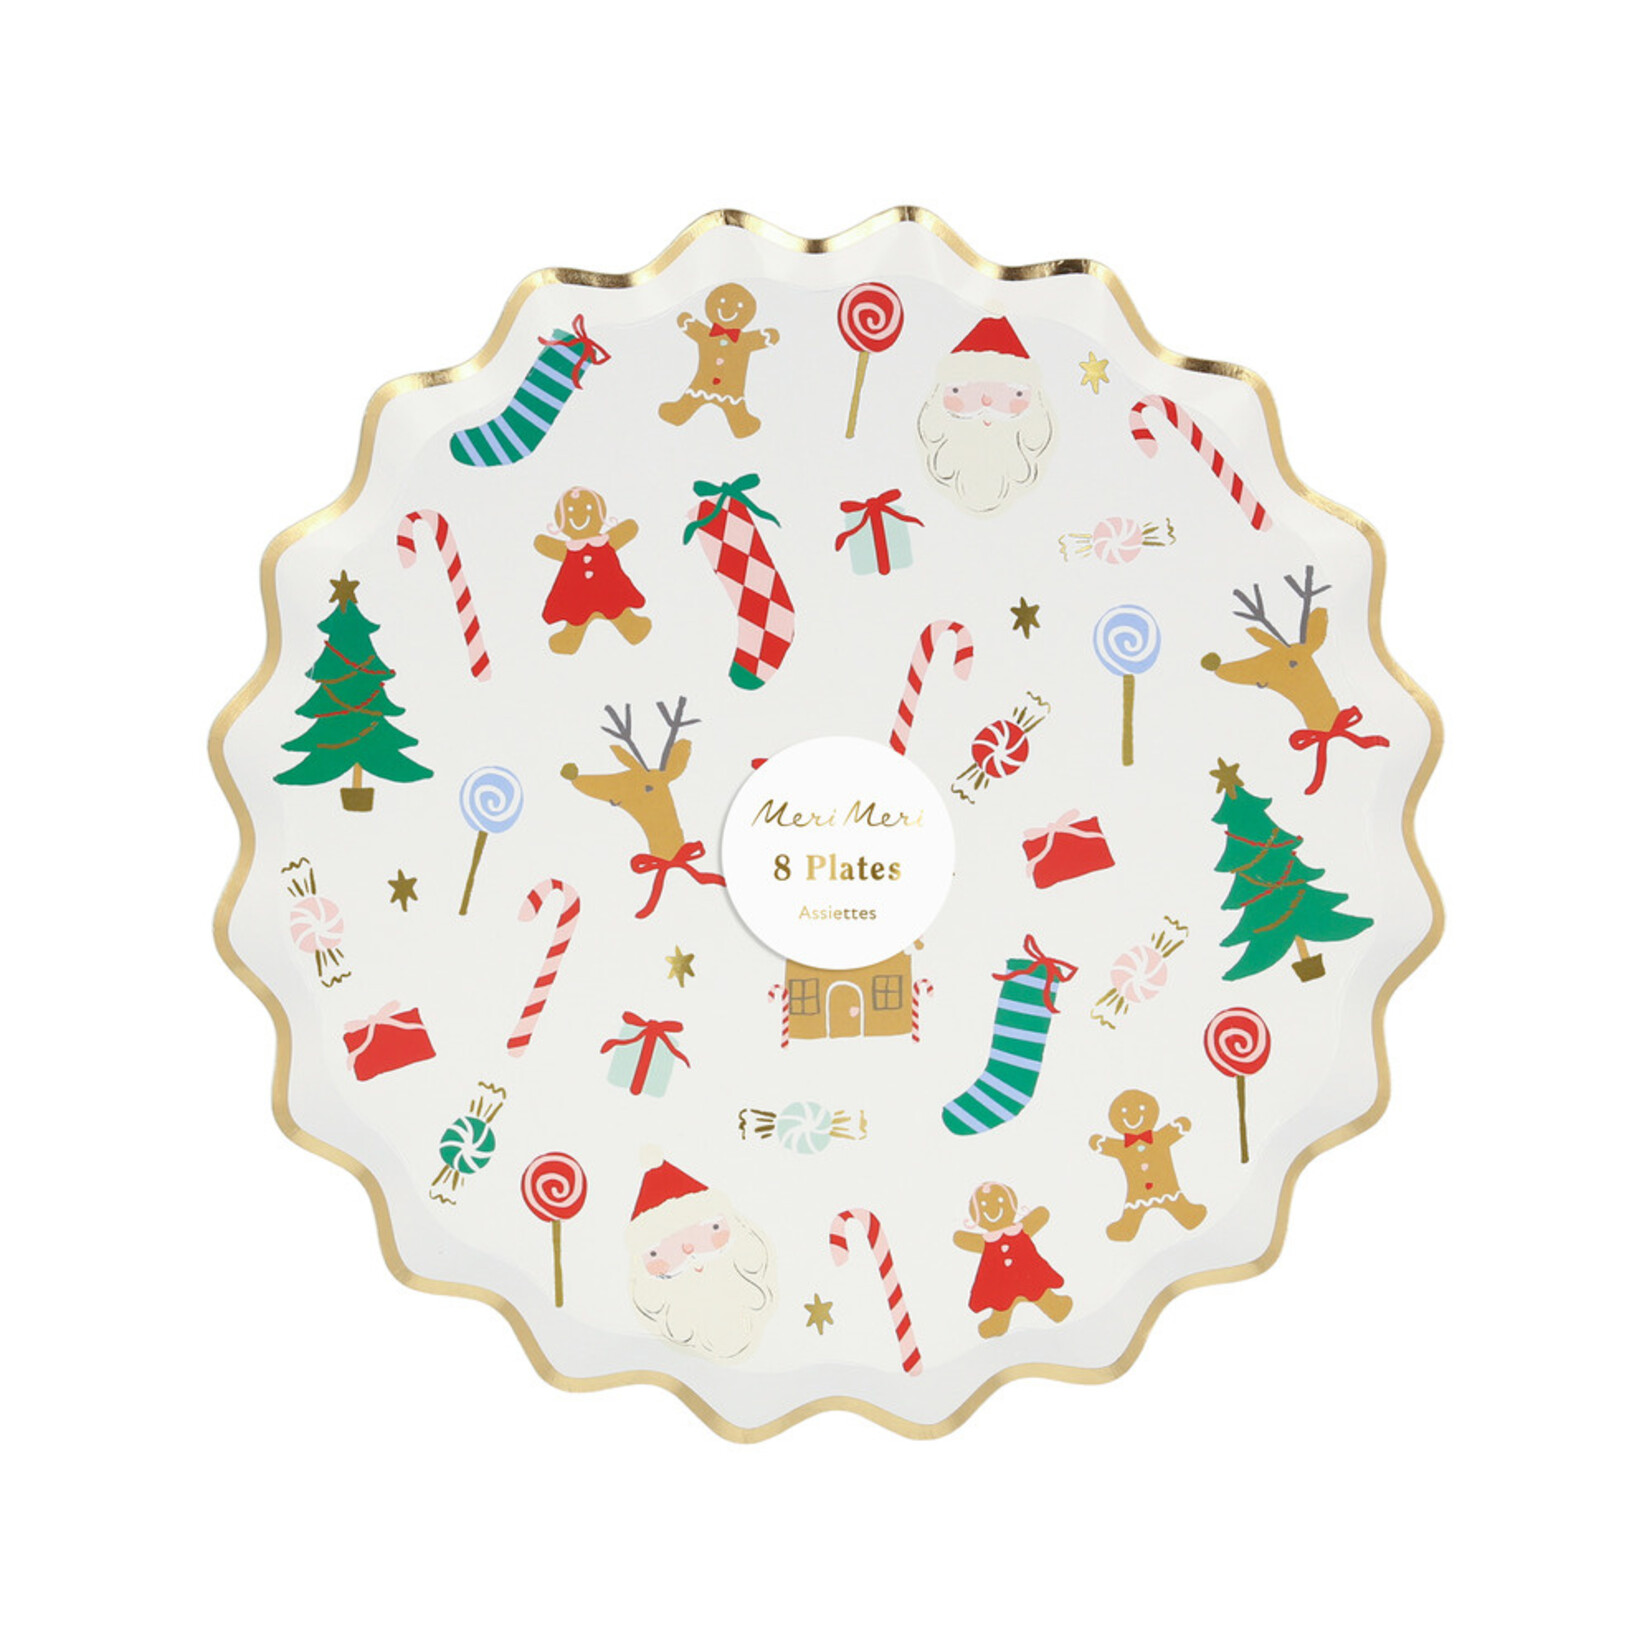 MERIMERI Jolly Christmas side plates (8pcs)